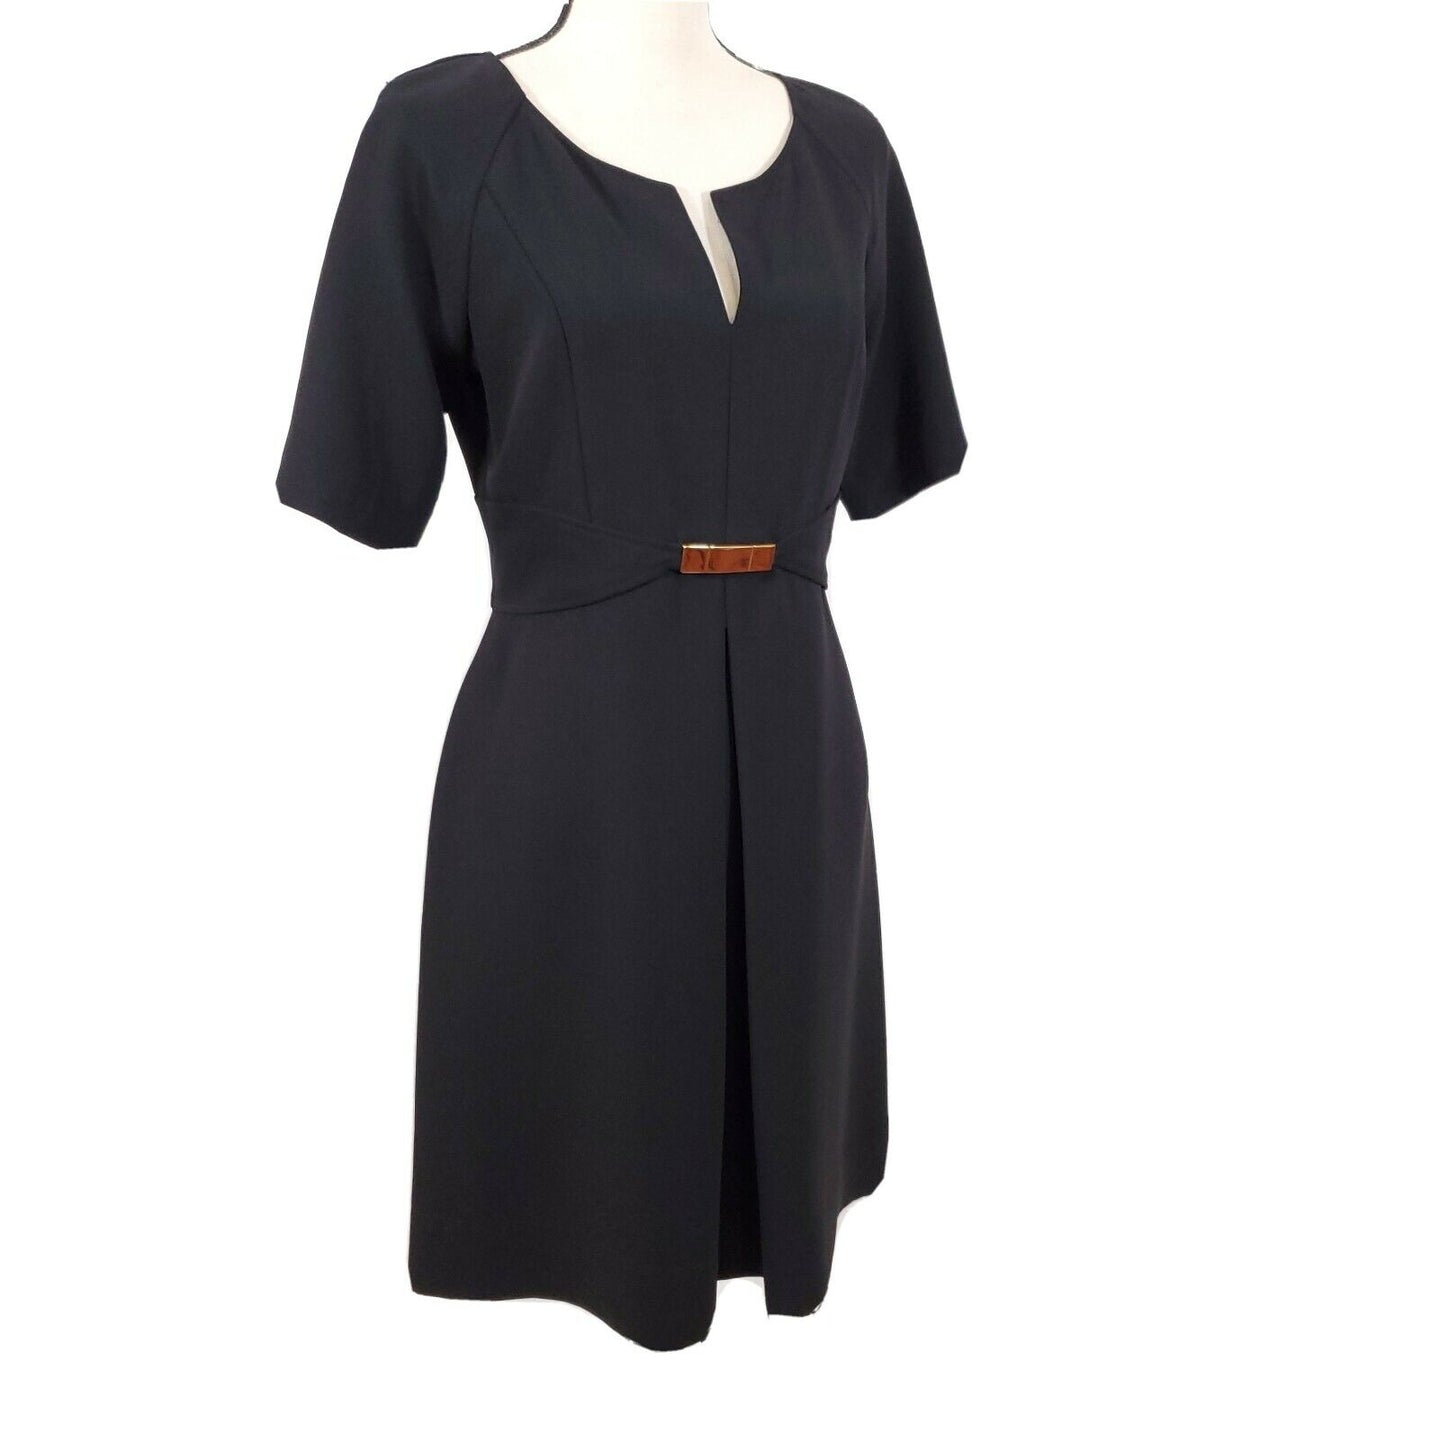 Ellen Tracy Short Sleeve Little Black Dress Size 8